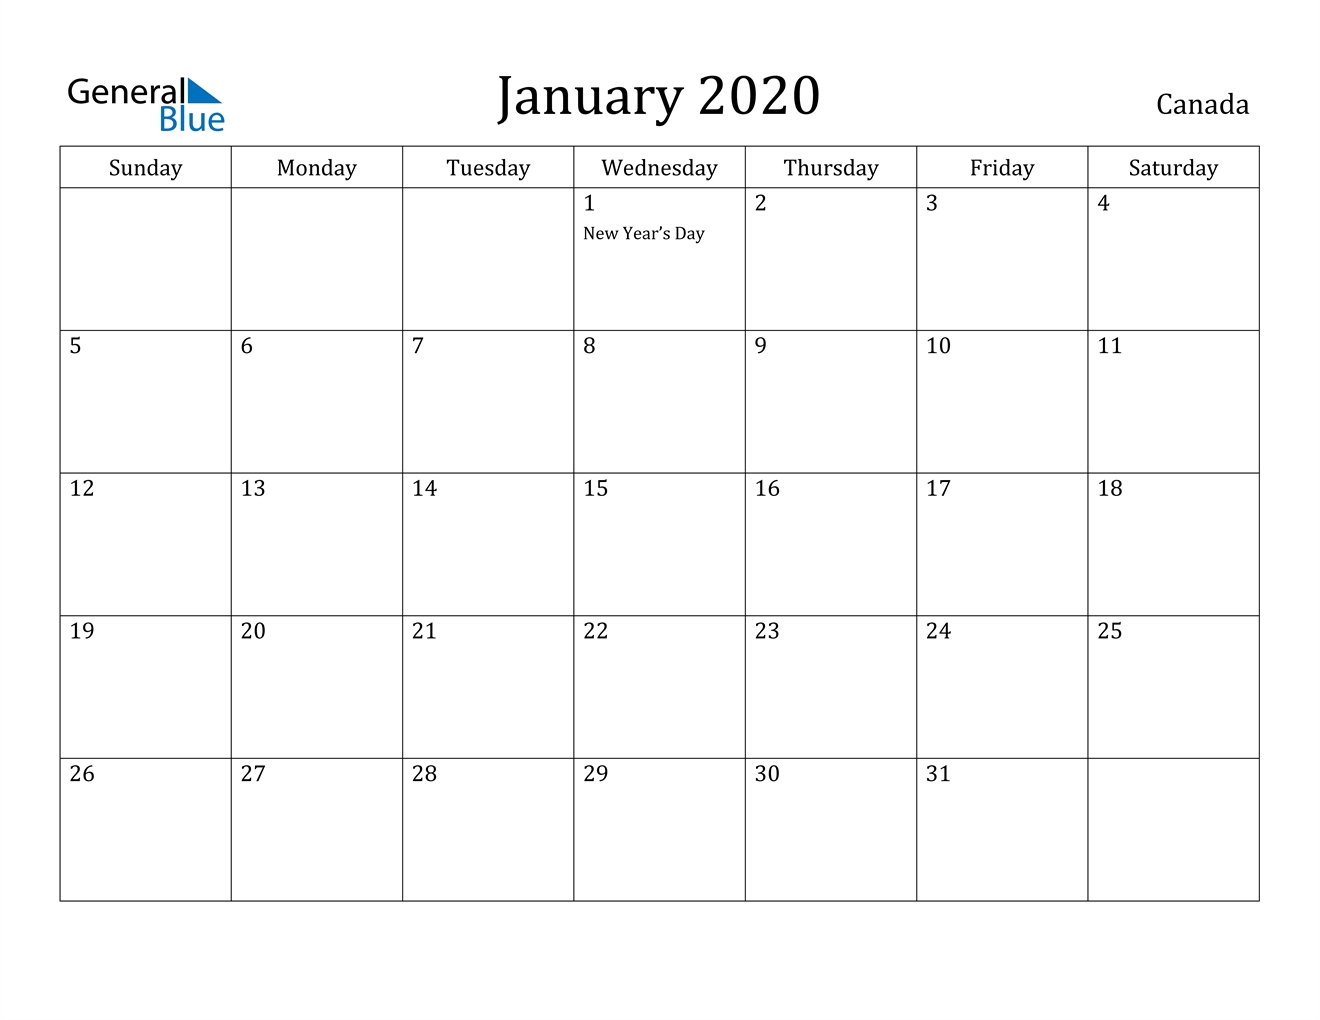 January 2020 Calendar - Canada Extraordinary 2020 Calendar Canada Printable With Holidays